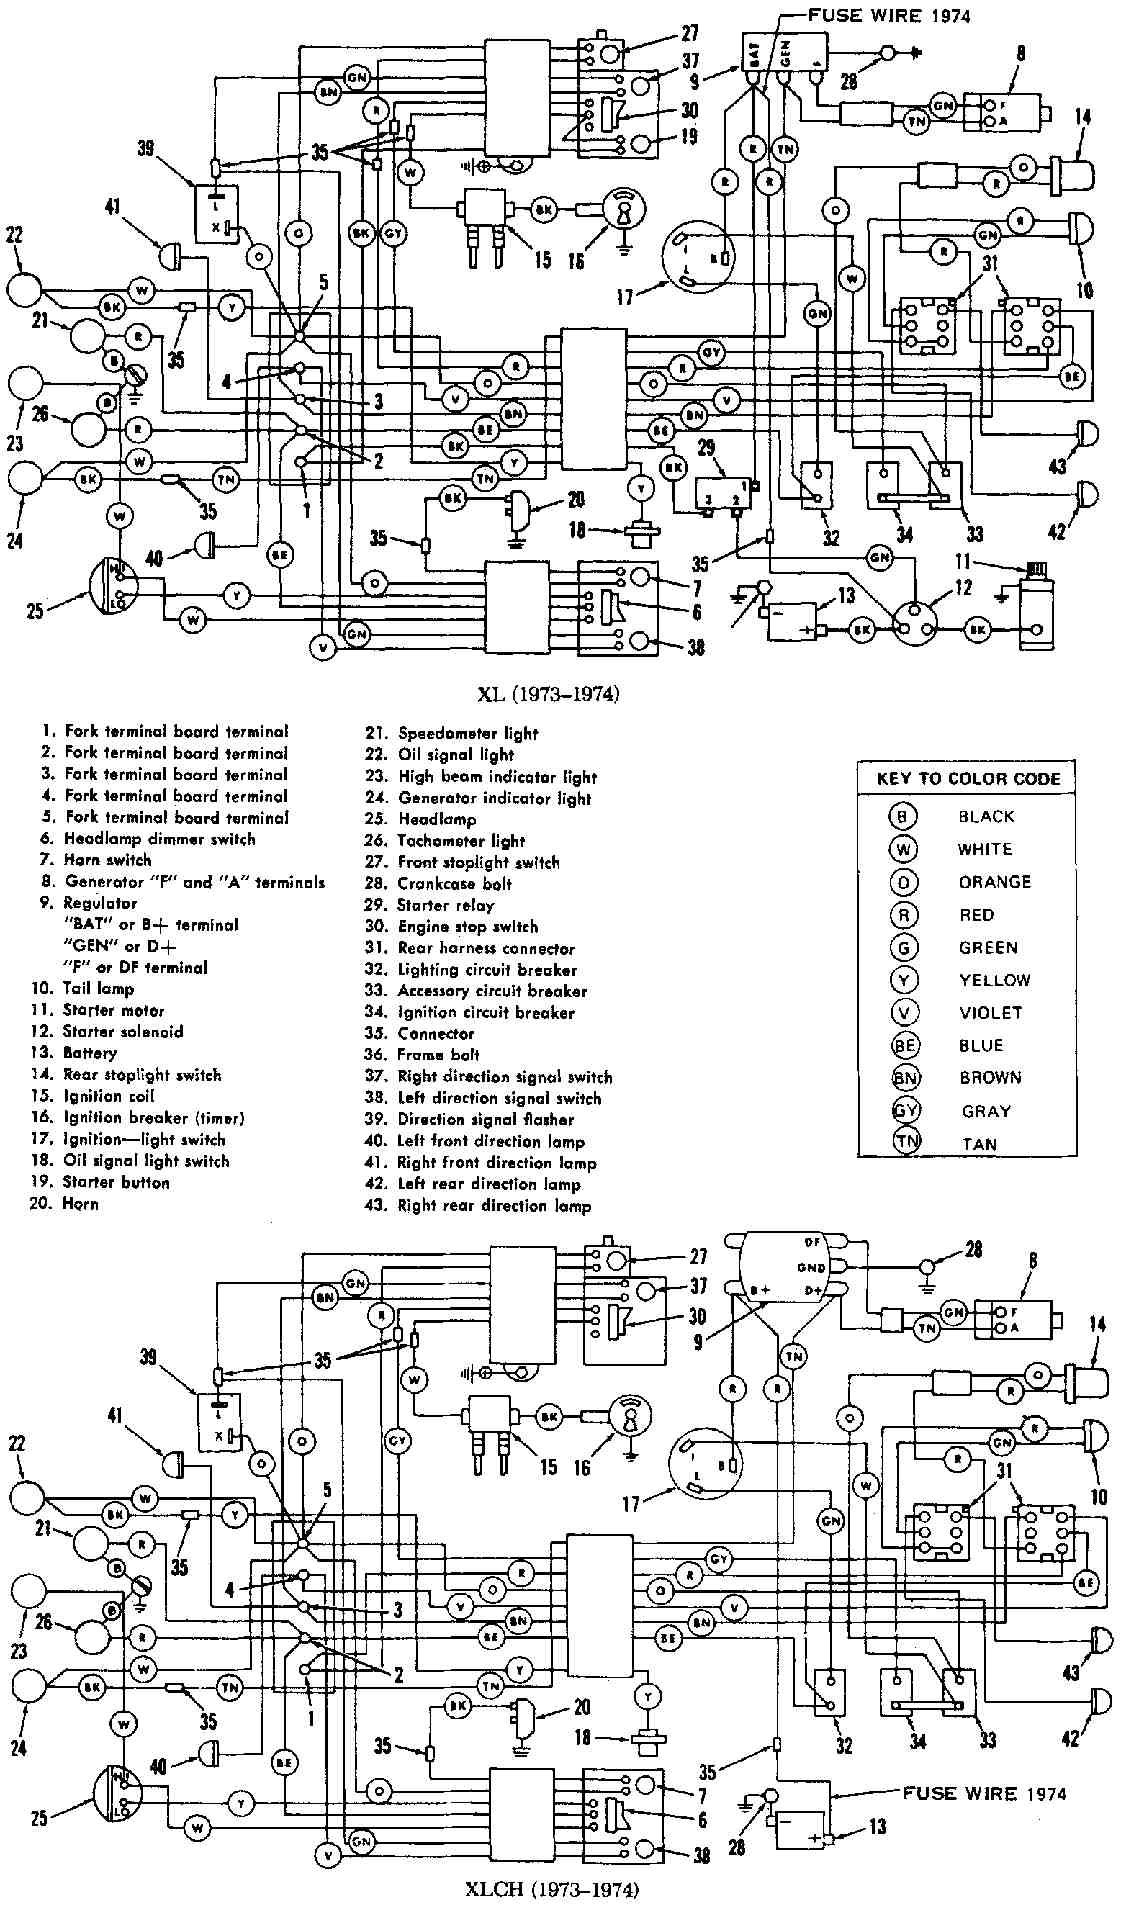 HARLEY DAVIDSON - Motorcycles Manual Pdf, Wiring Diagram & Fault Codes Harley Softail Ignition Switch Wiring Diagram MOTORCYCLE Manuals PDF & Wiring Diagrams